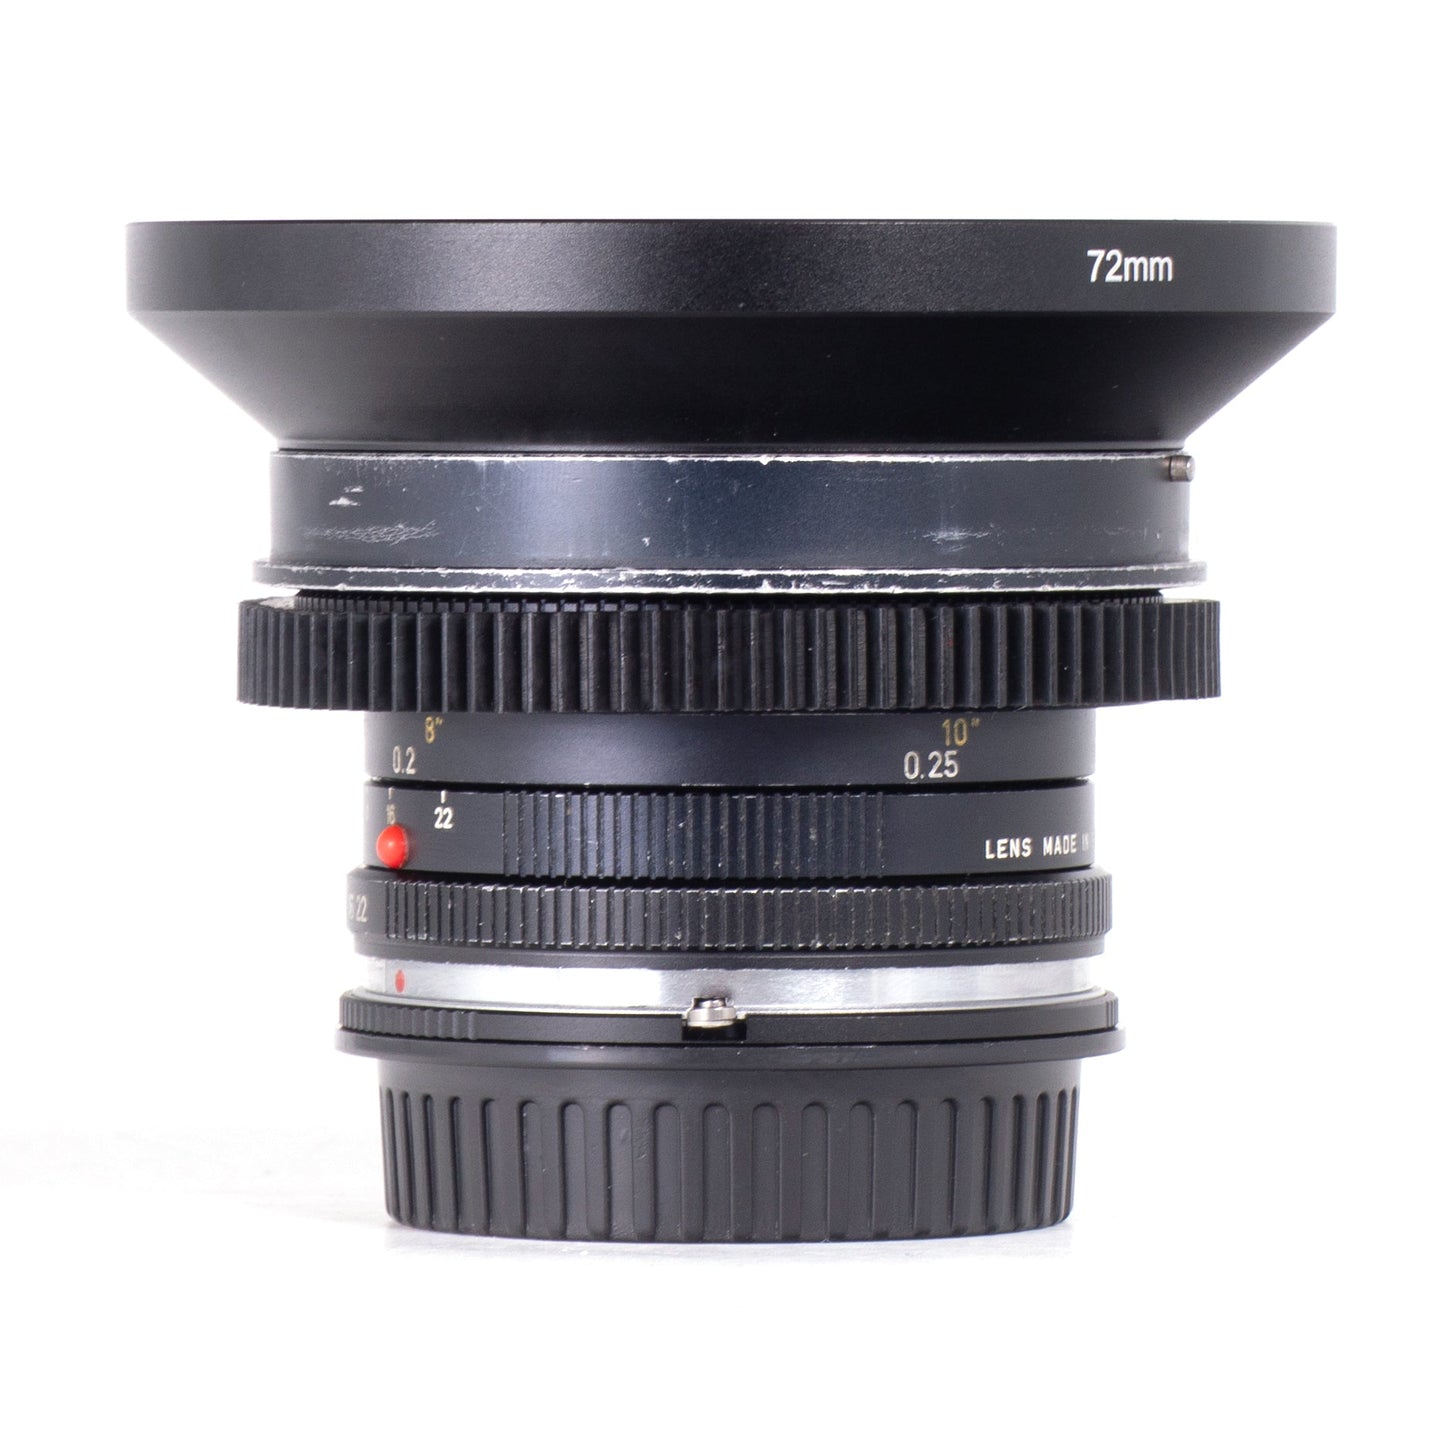 Leitz Wetzlar Super - Angulon - R 21mm F4 Cine Mod Prime Lens For Canon EF! - TerPhoto Store